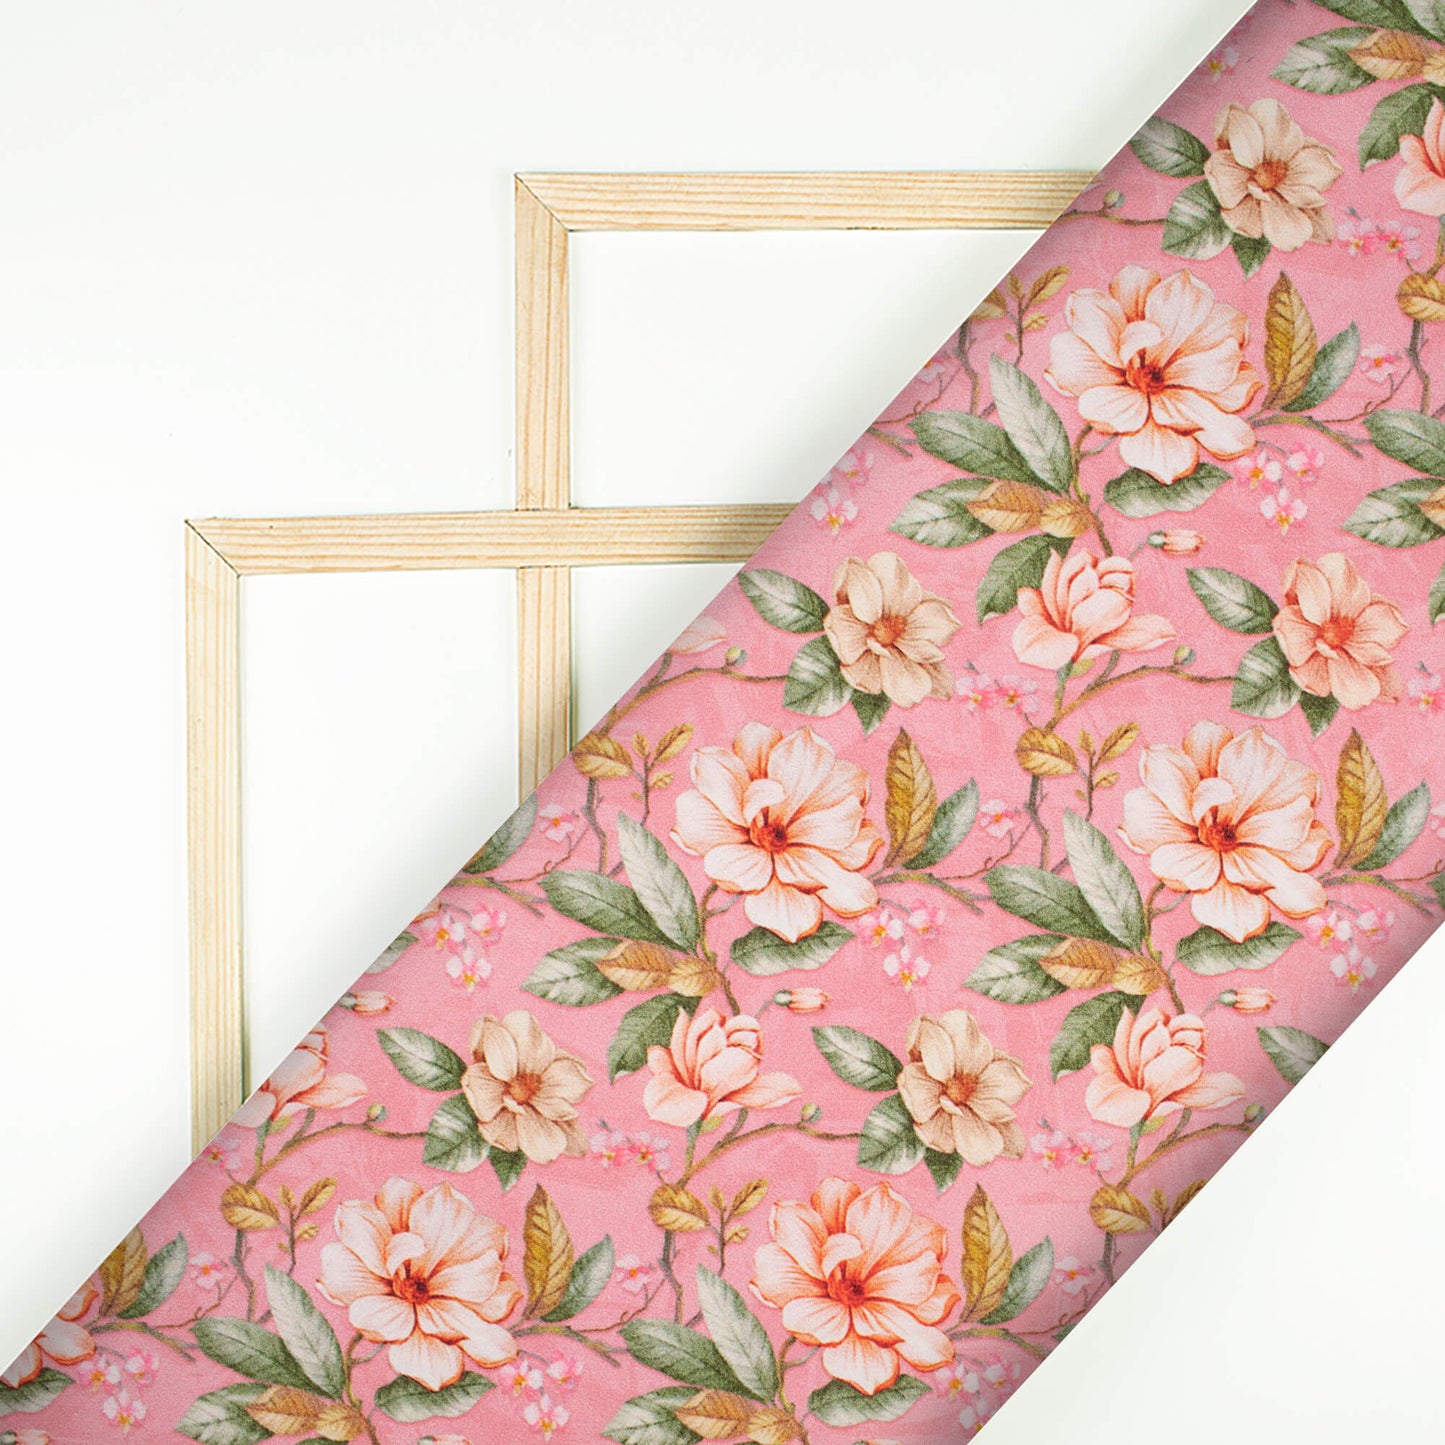 Creamy Pink And Green Floral Pattern Digital Print Lush Satin Fabric